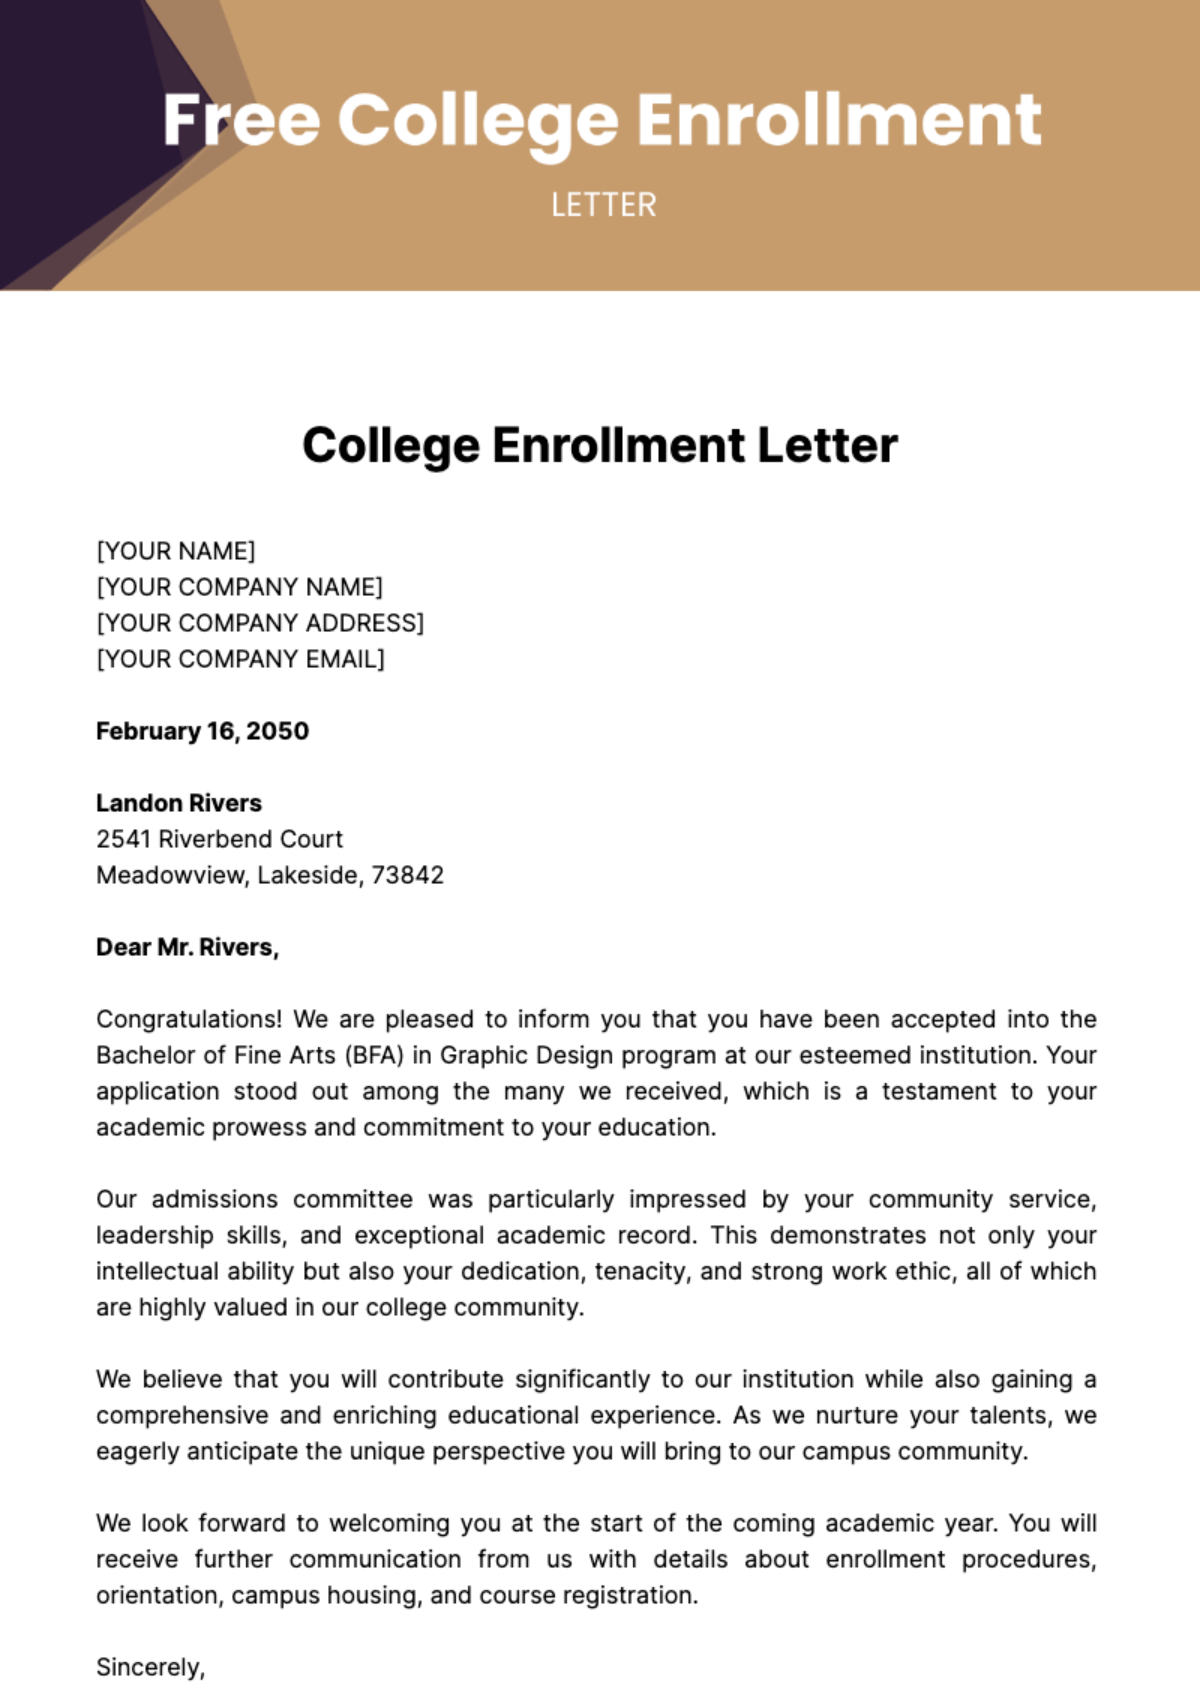 Free College Enrollment Letter Template